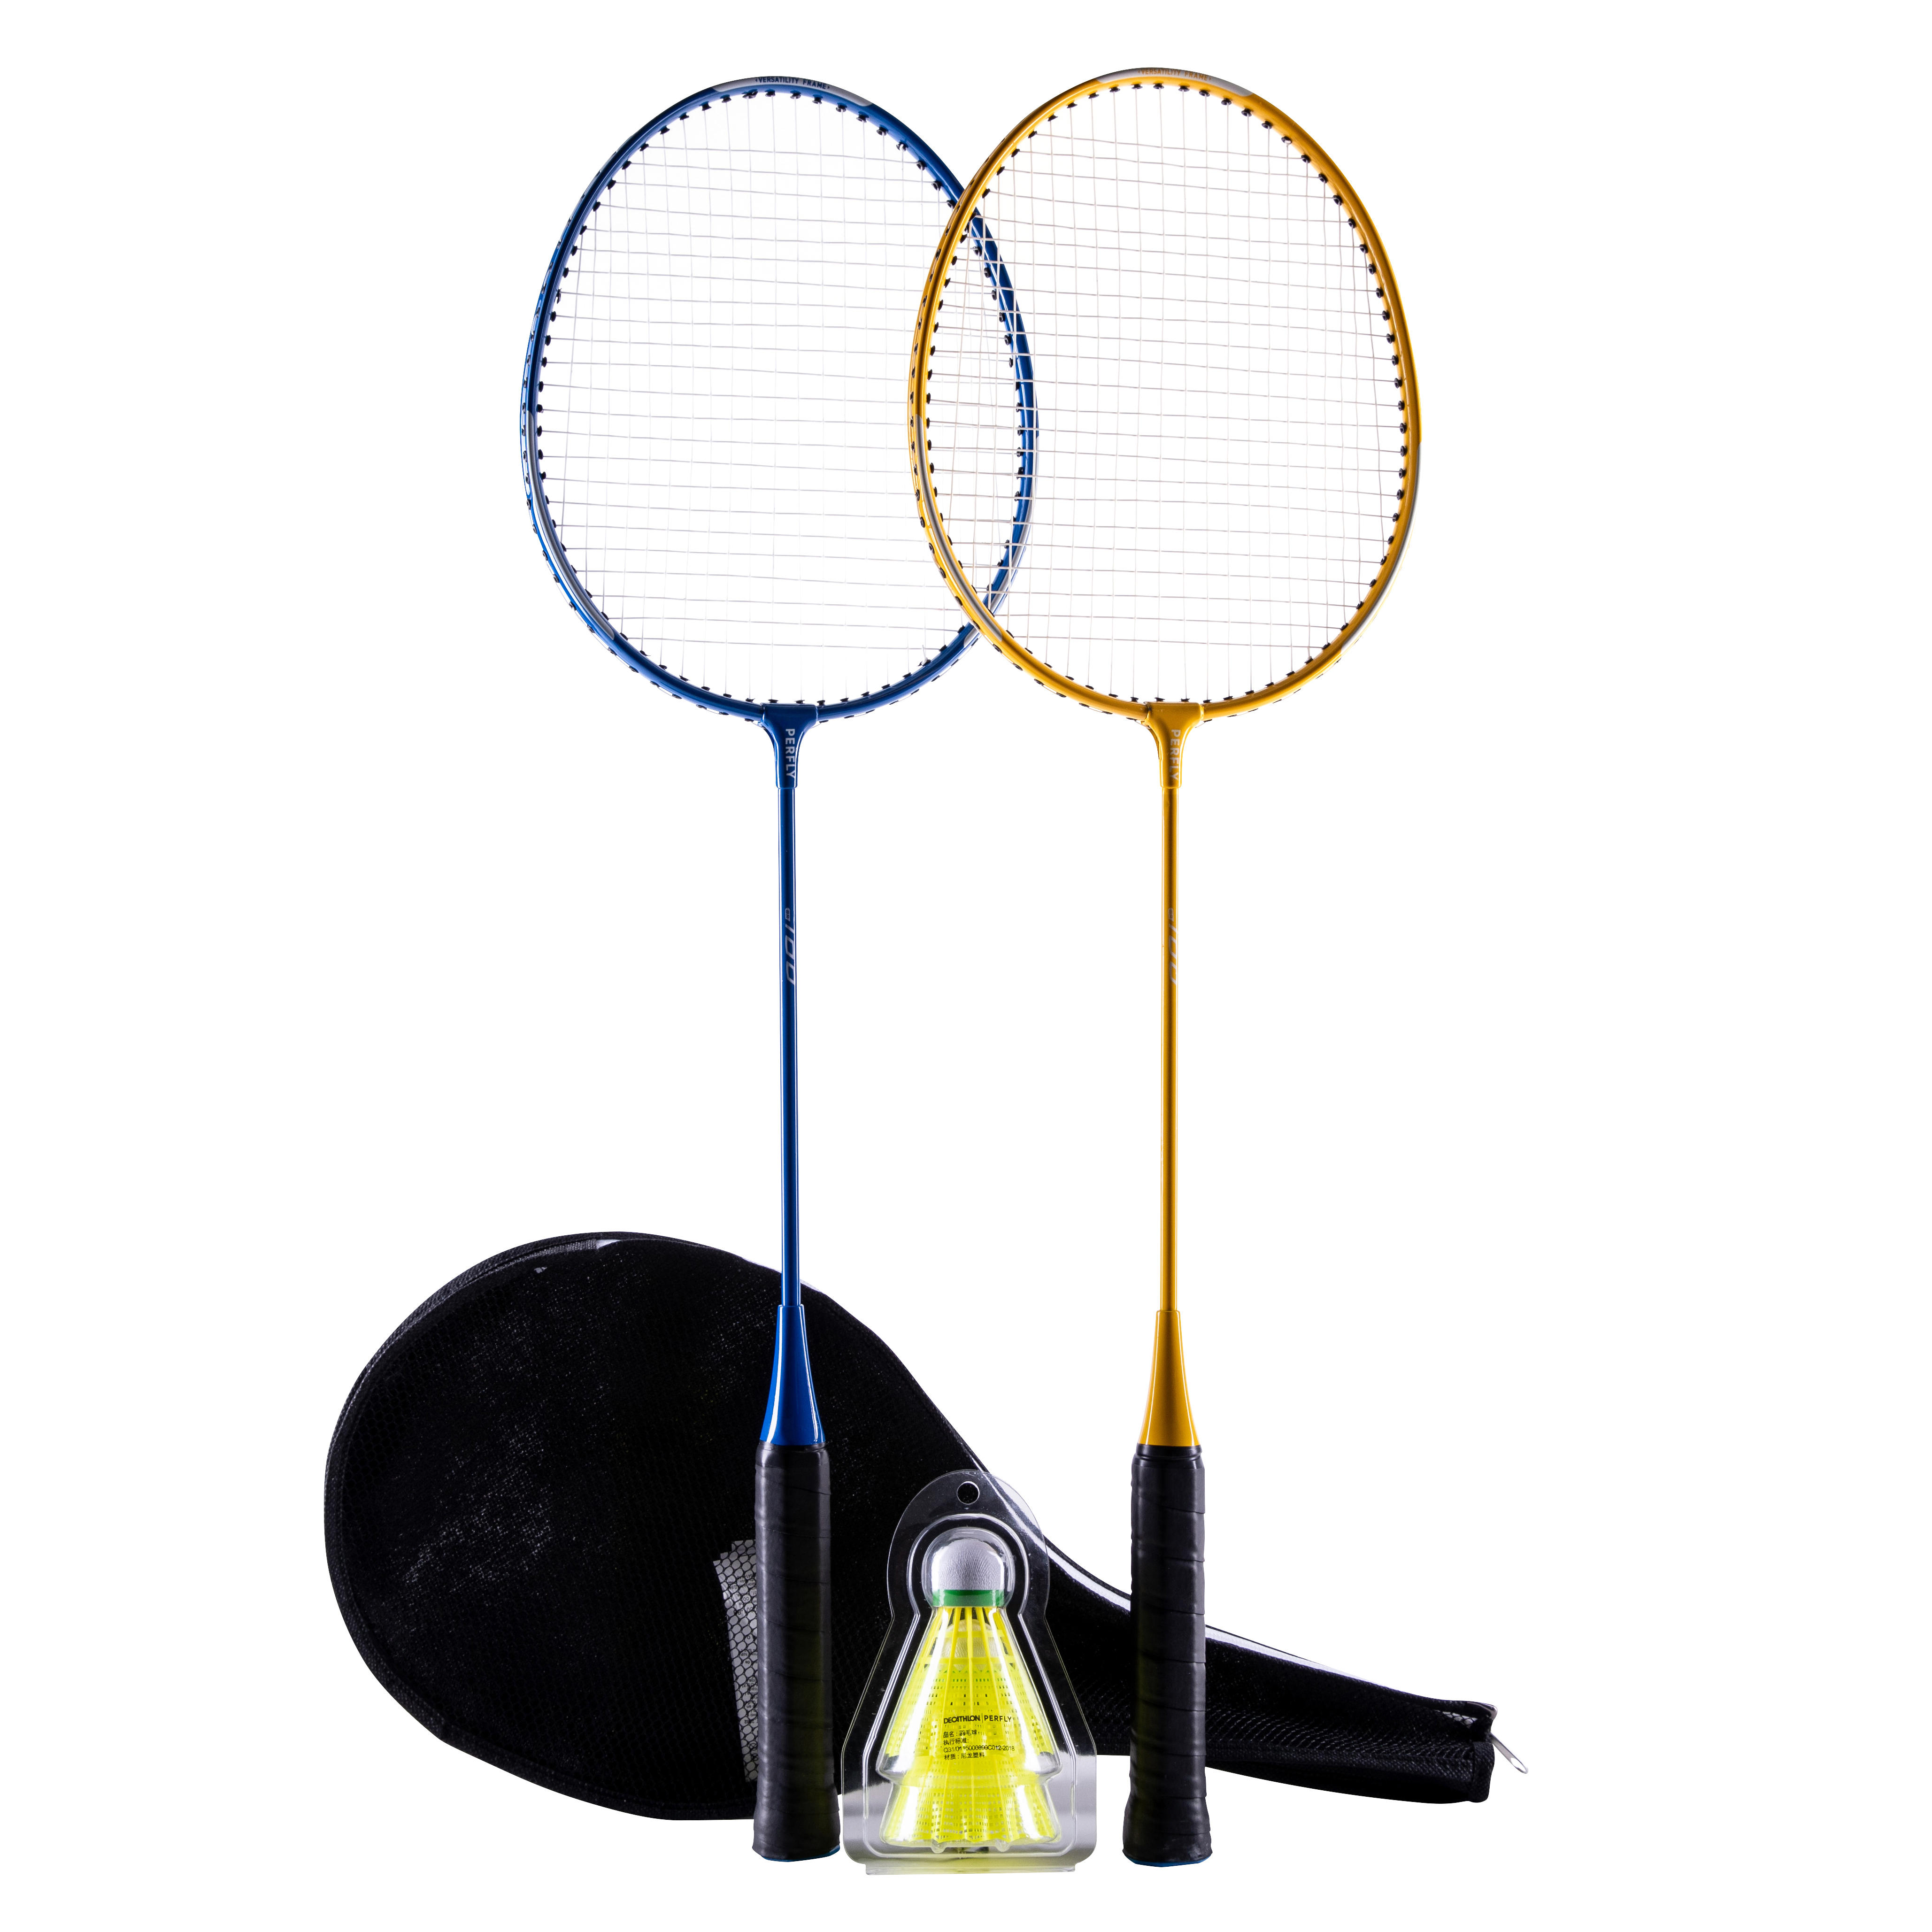 DAmeng Badminton Set Portable Badminton Combination Set Backyard Badminton System,Exercise Indoor/Outdoor Sport Game 4 Badminton Racket with net und 2 Birdie 